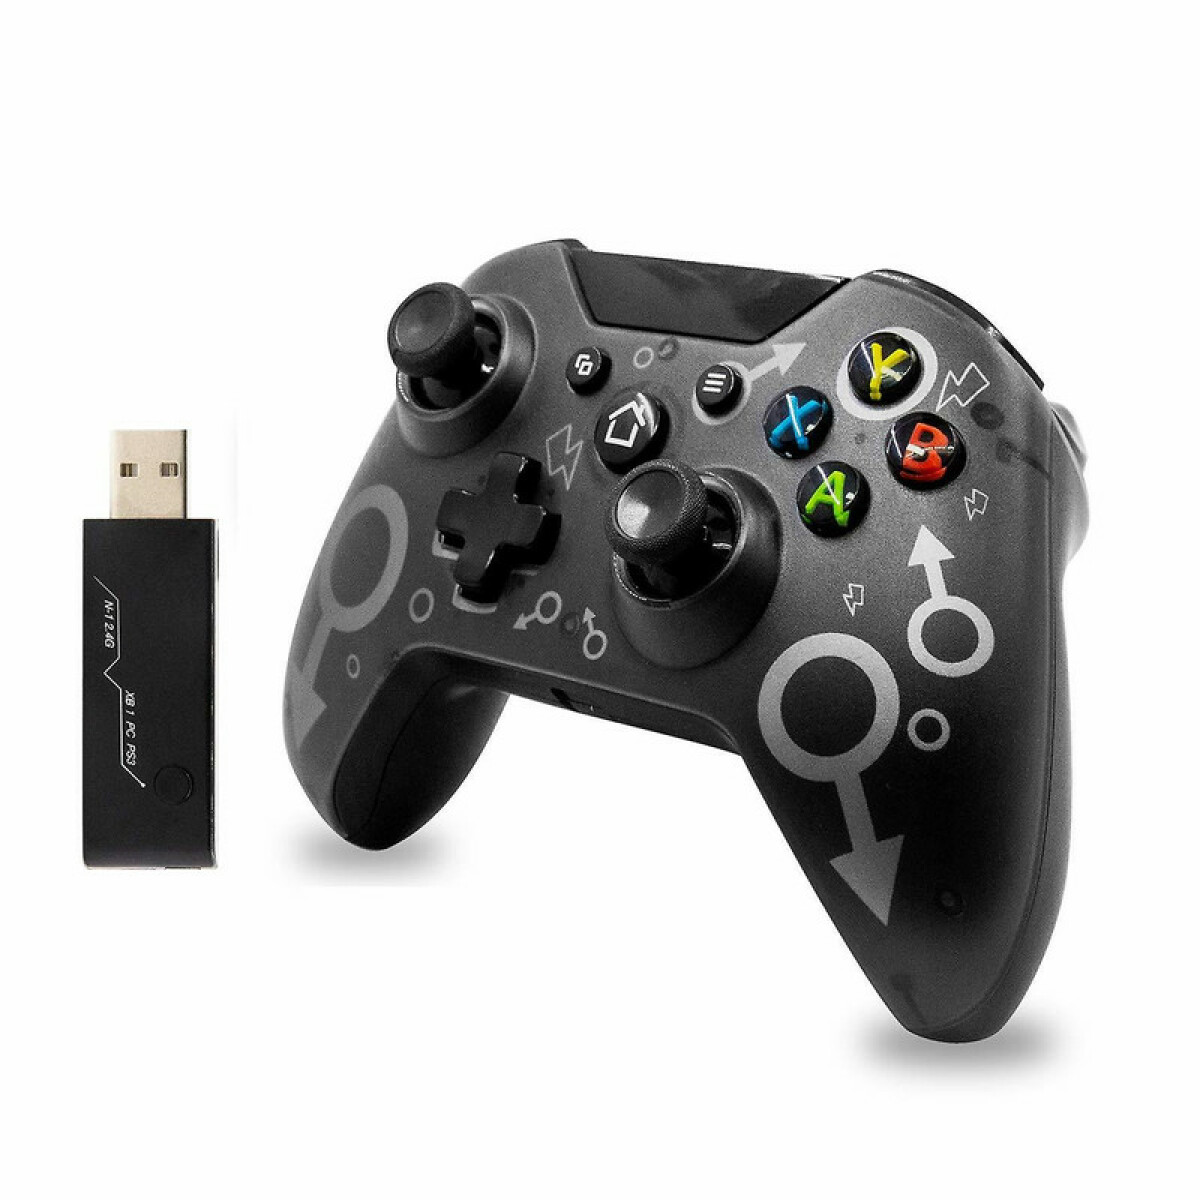 Chrono - Manette sans fil 2.4G pour Xbox One, manette de jeu sans fil pour manette  Xbox Manette de jeu pour Xbox One / One S / One X / One Elite /